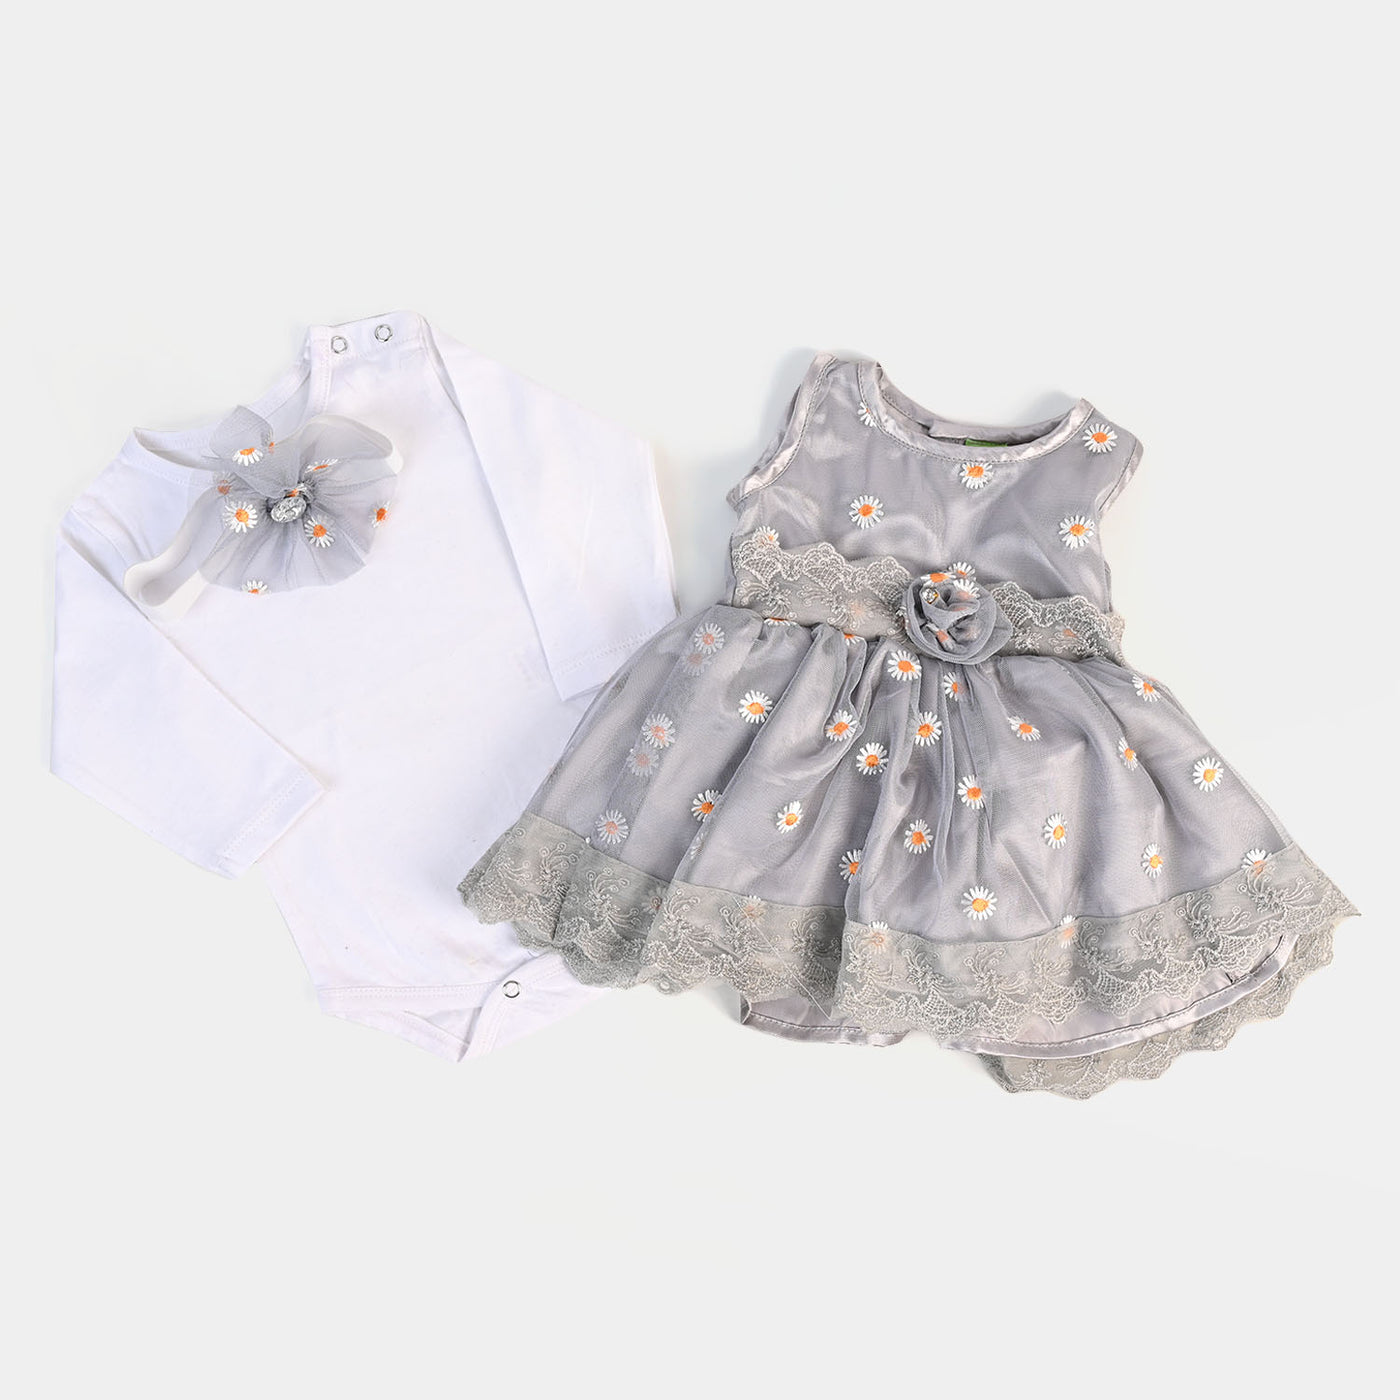 Infant Girls 3PCs Gift Set   - GREY